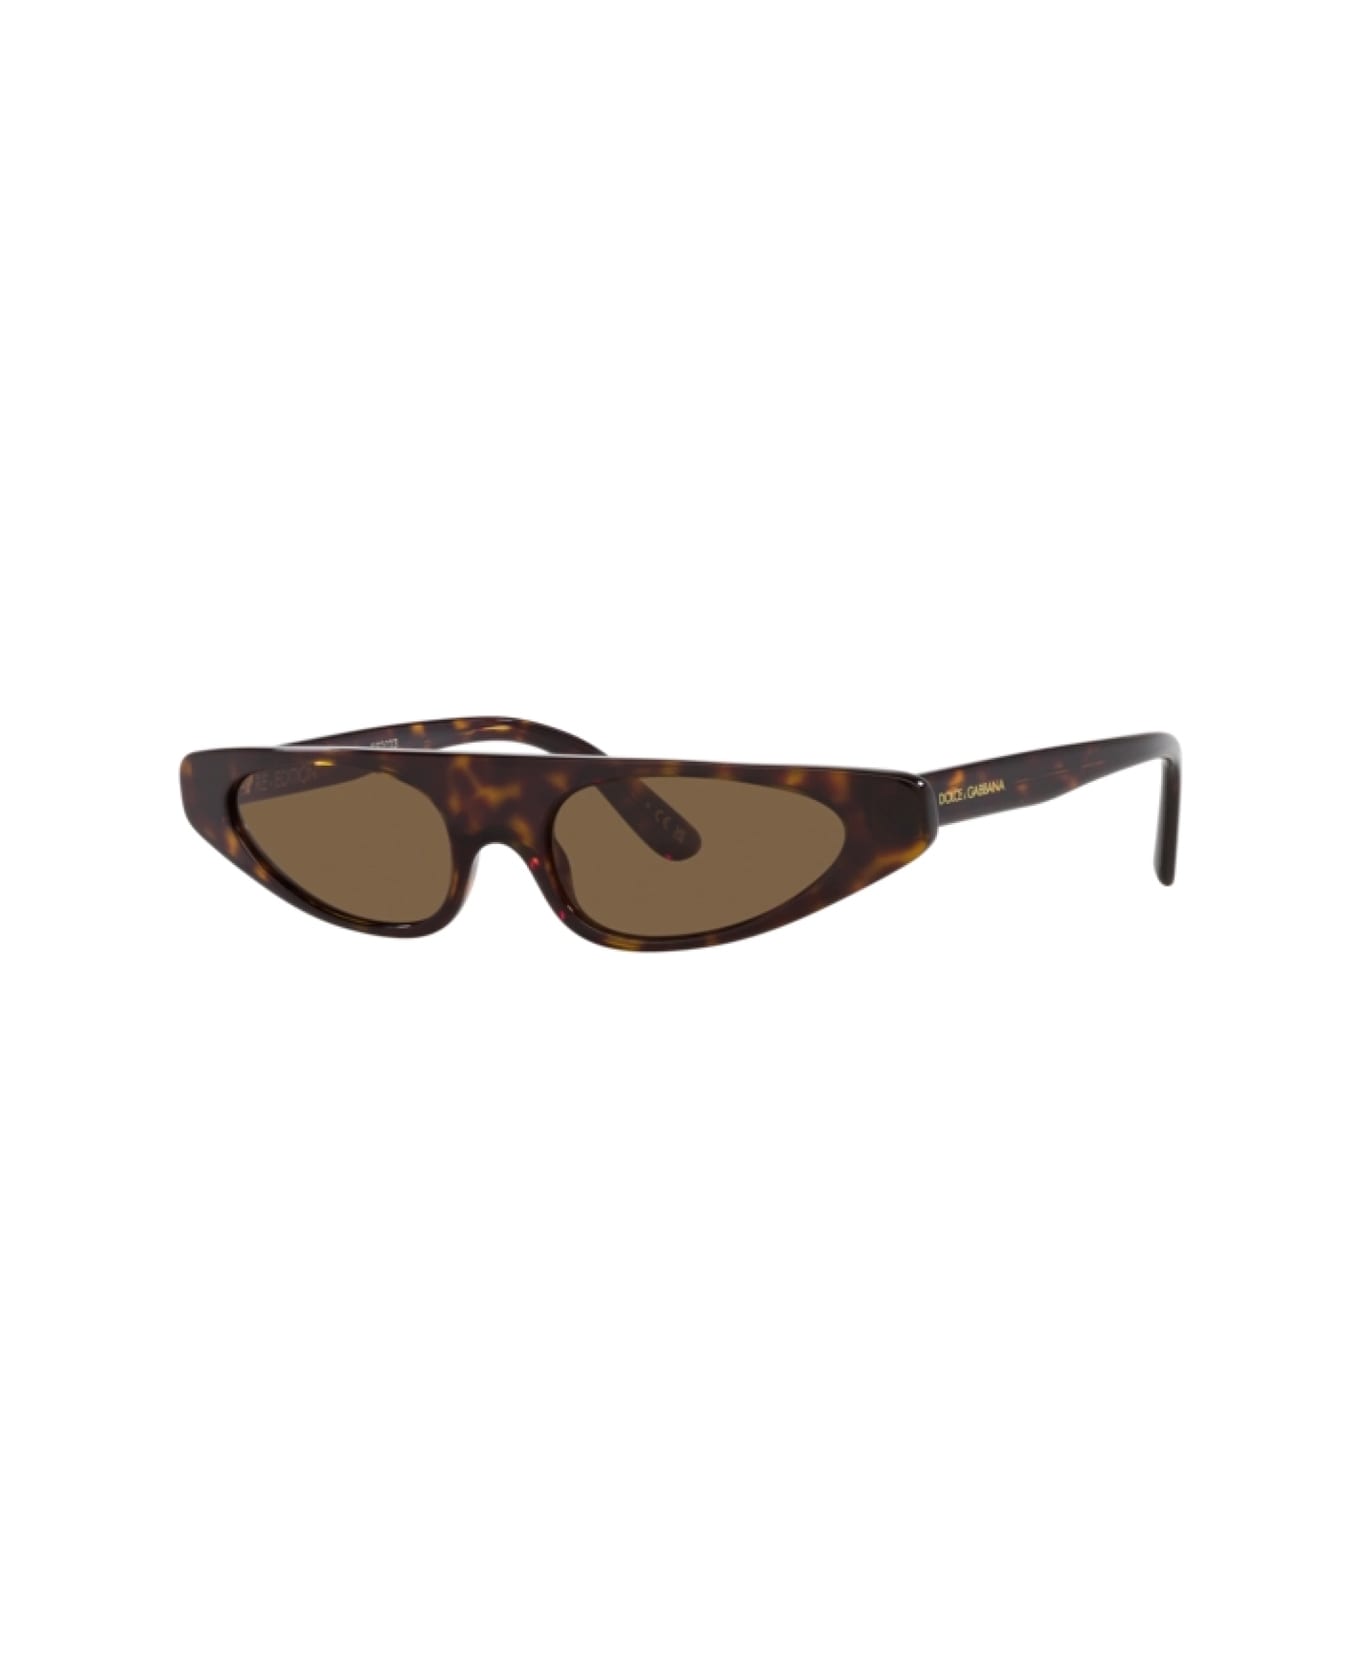 Dolce & Gabbana Eyewear Dg4442 502/73 Sunglasses - Marrone